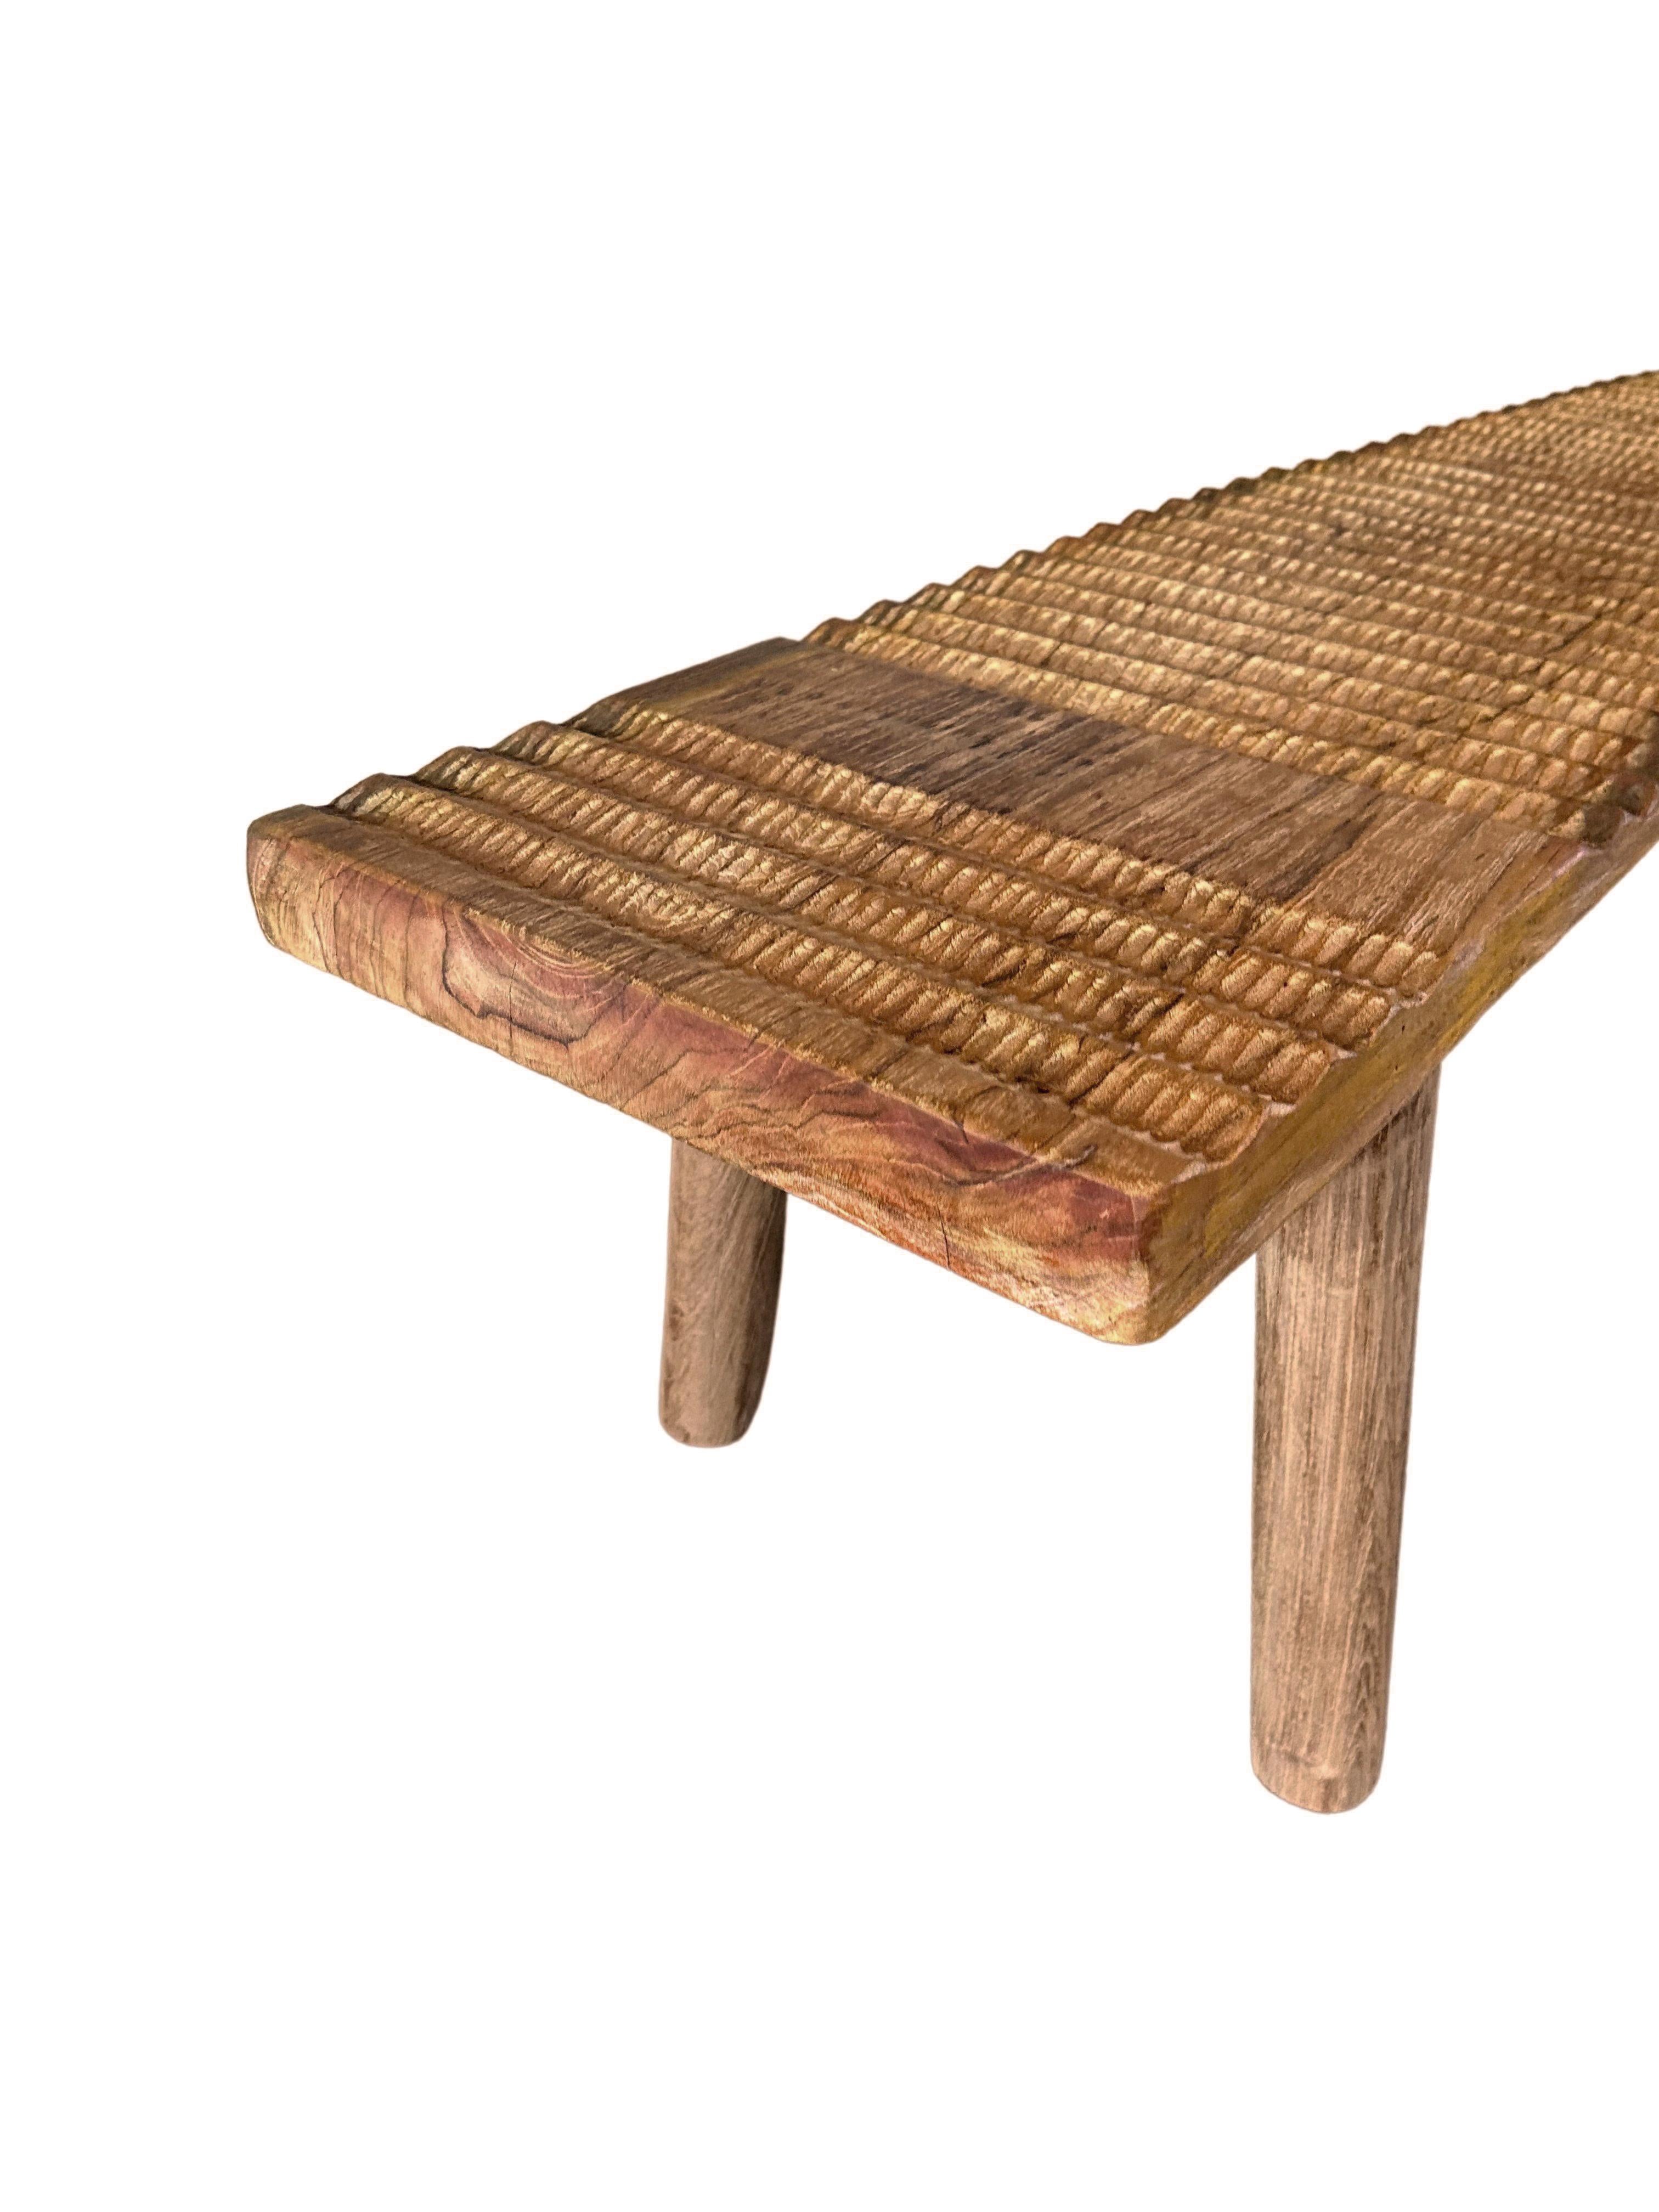 Contemporary Teak Wood Sculptural Bench, Carved Detailing, Modern Organic For Sale